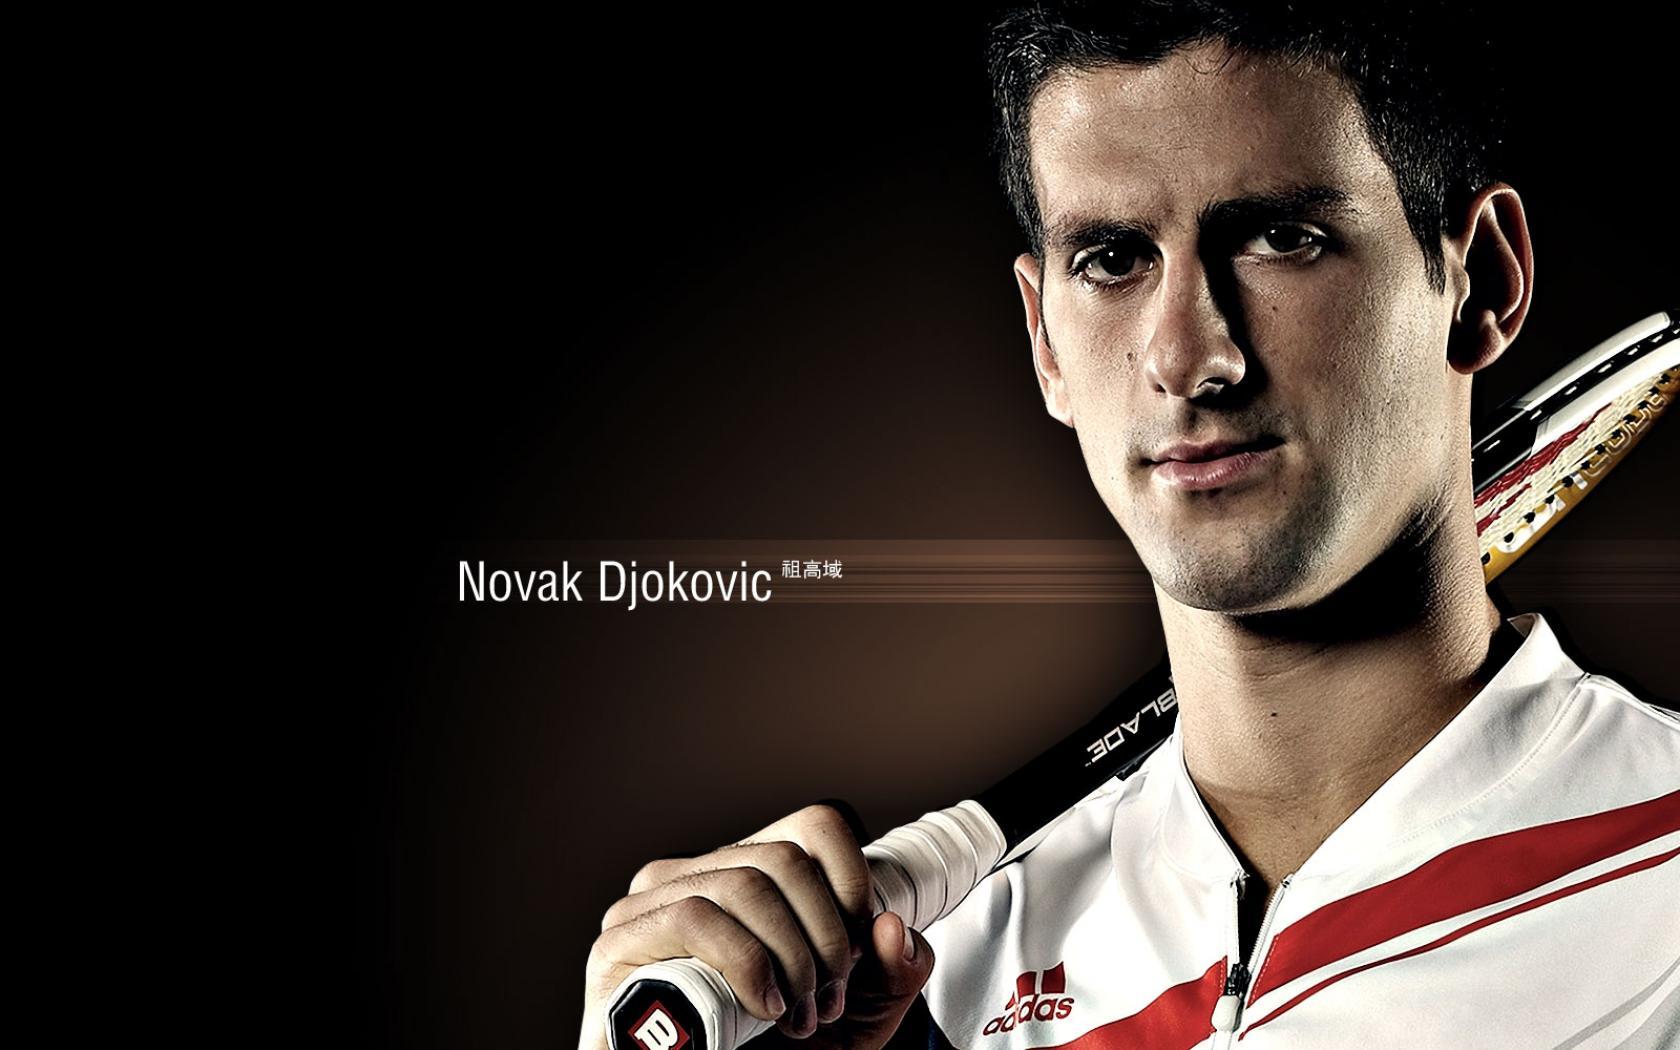 Fonds d&Novak Djokovic : tous les wallpapers Novak Djokovic.